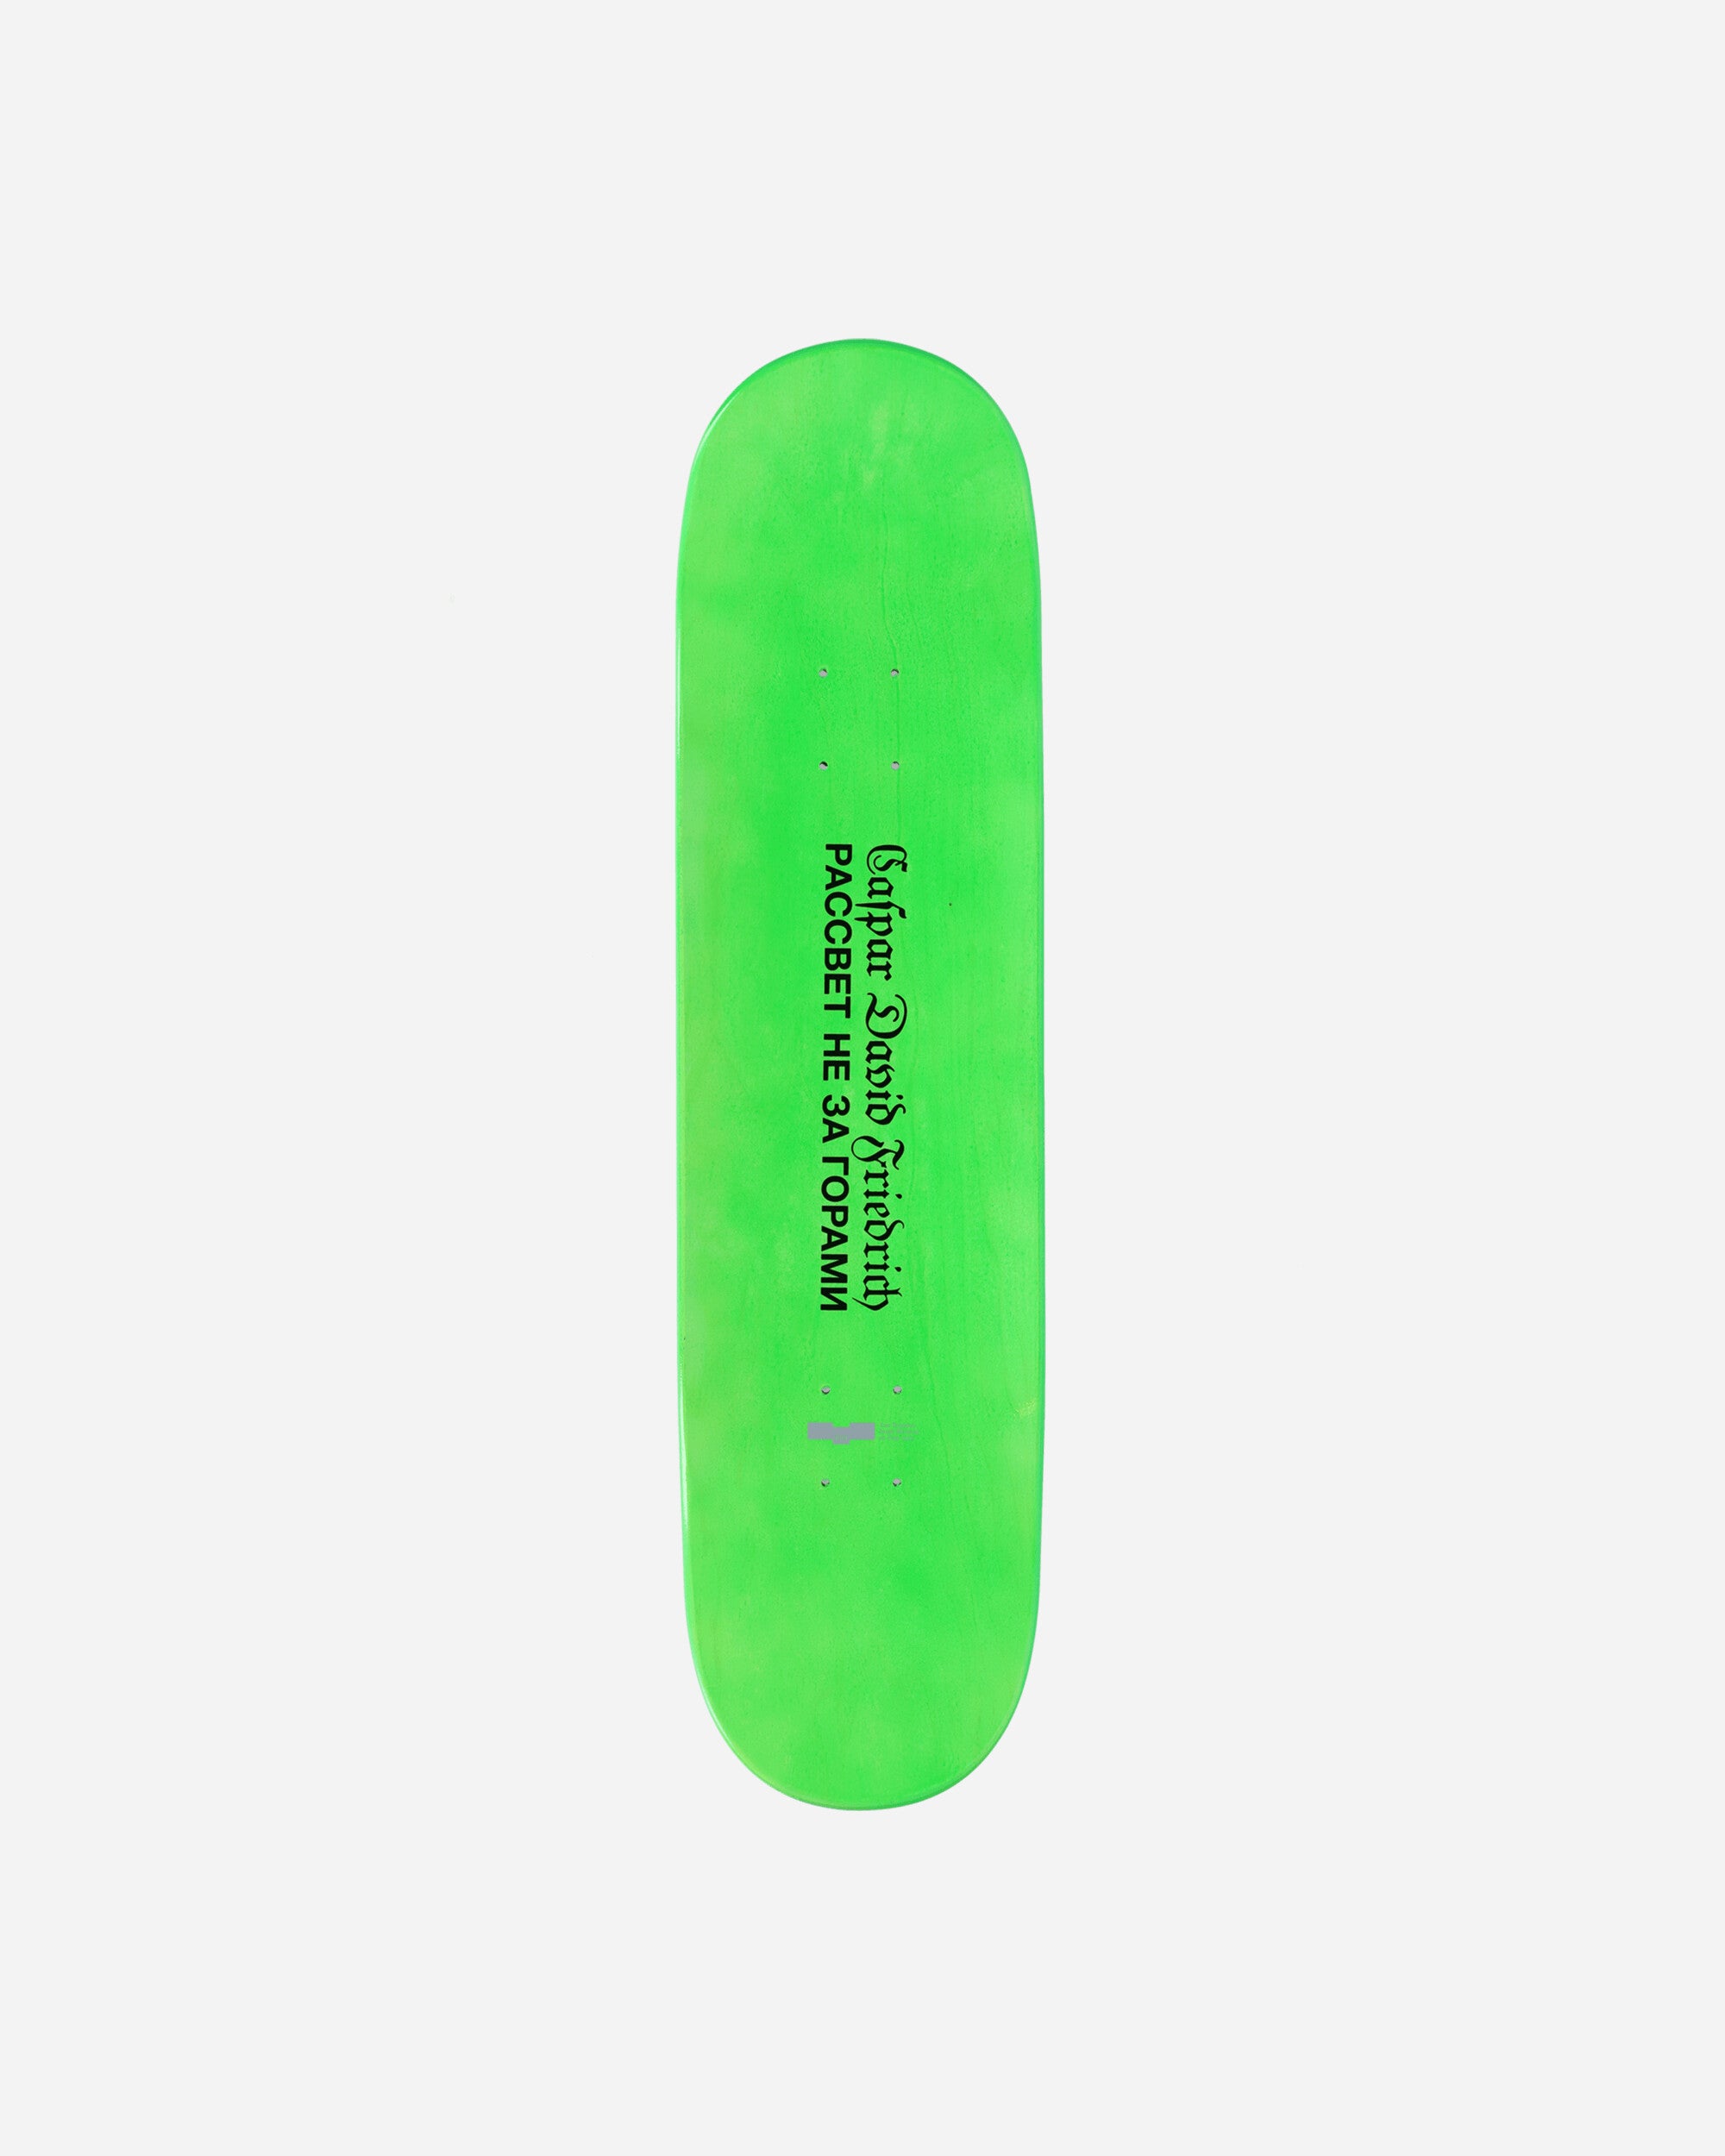 Paccbet Caspar David Friedrich Board 8.5 Black Skateboarding Decks PACC10SK18 1